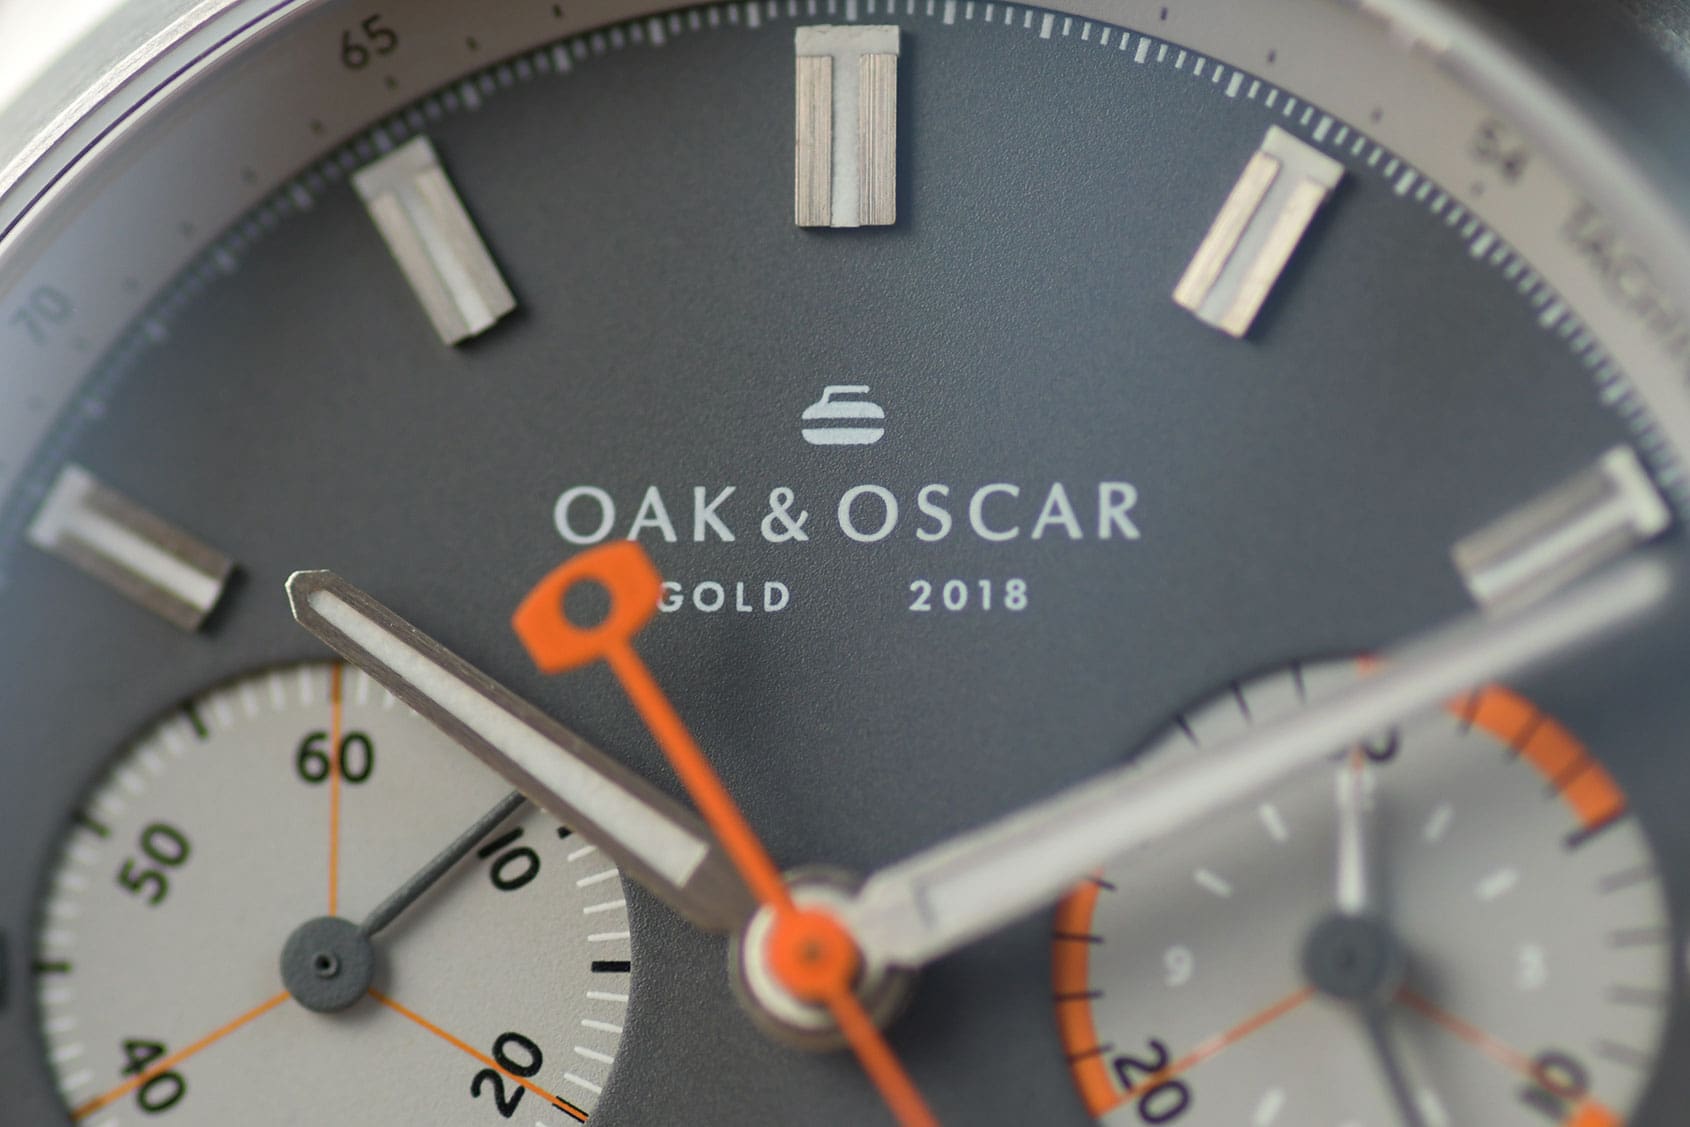 NEWS: Oak & Oscar’s one-of-a-kind Olympic watch 